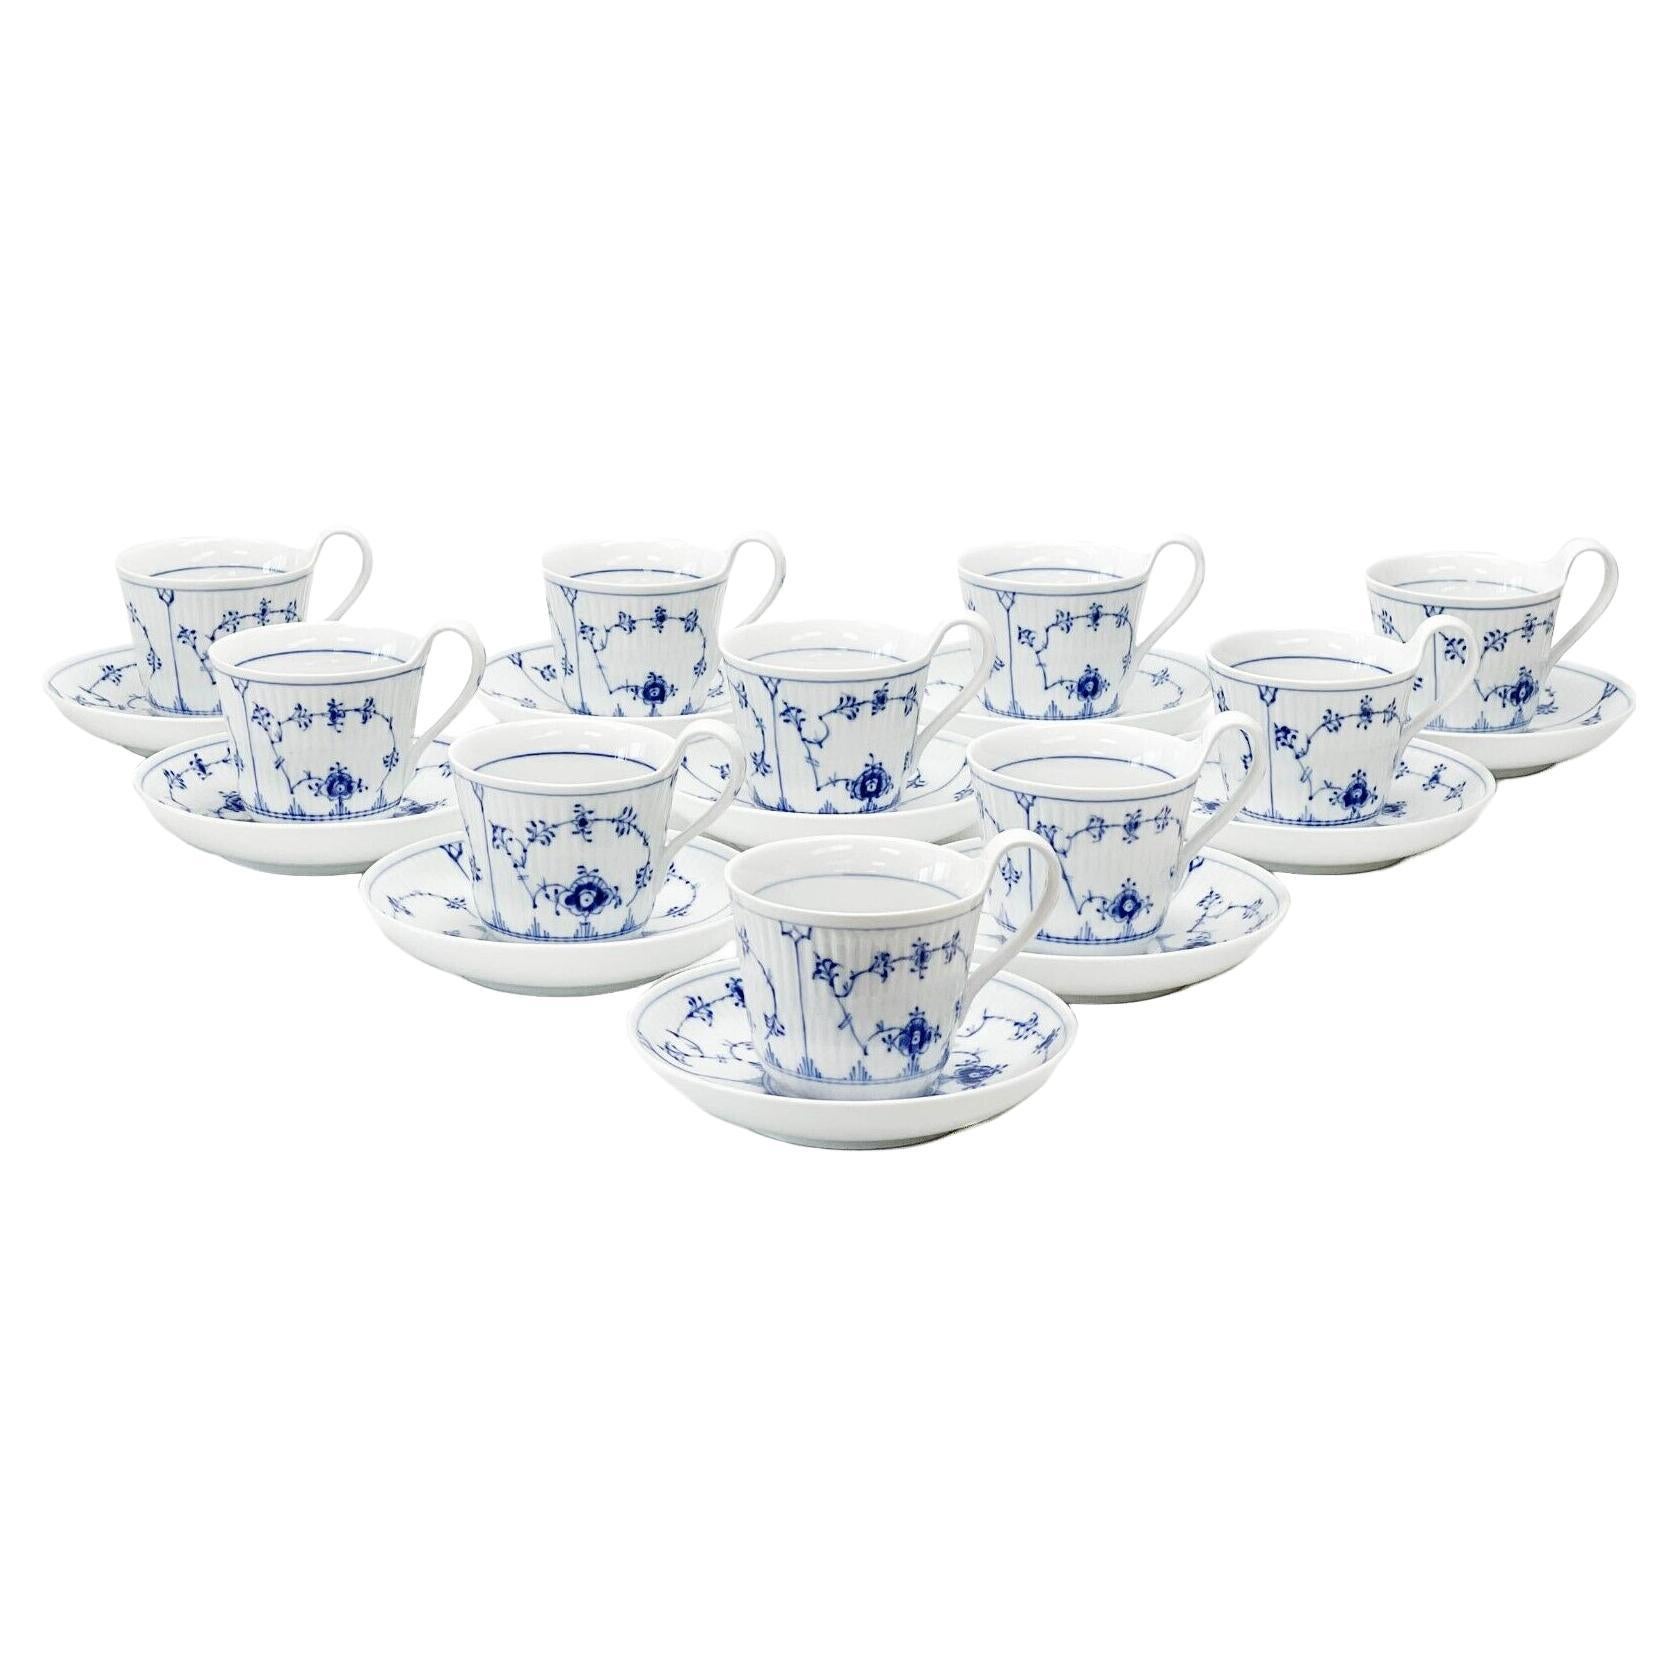  10 Royal Copenhagen Denmark Porcelain Cups & Saucers Blue Fluted #093 / #094 For Sale